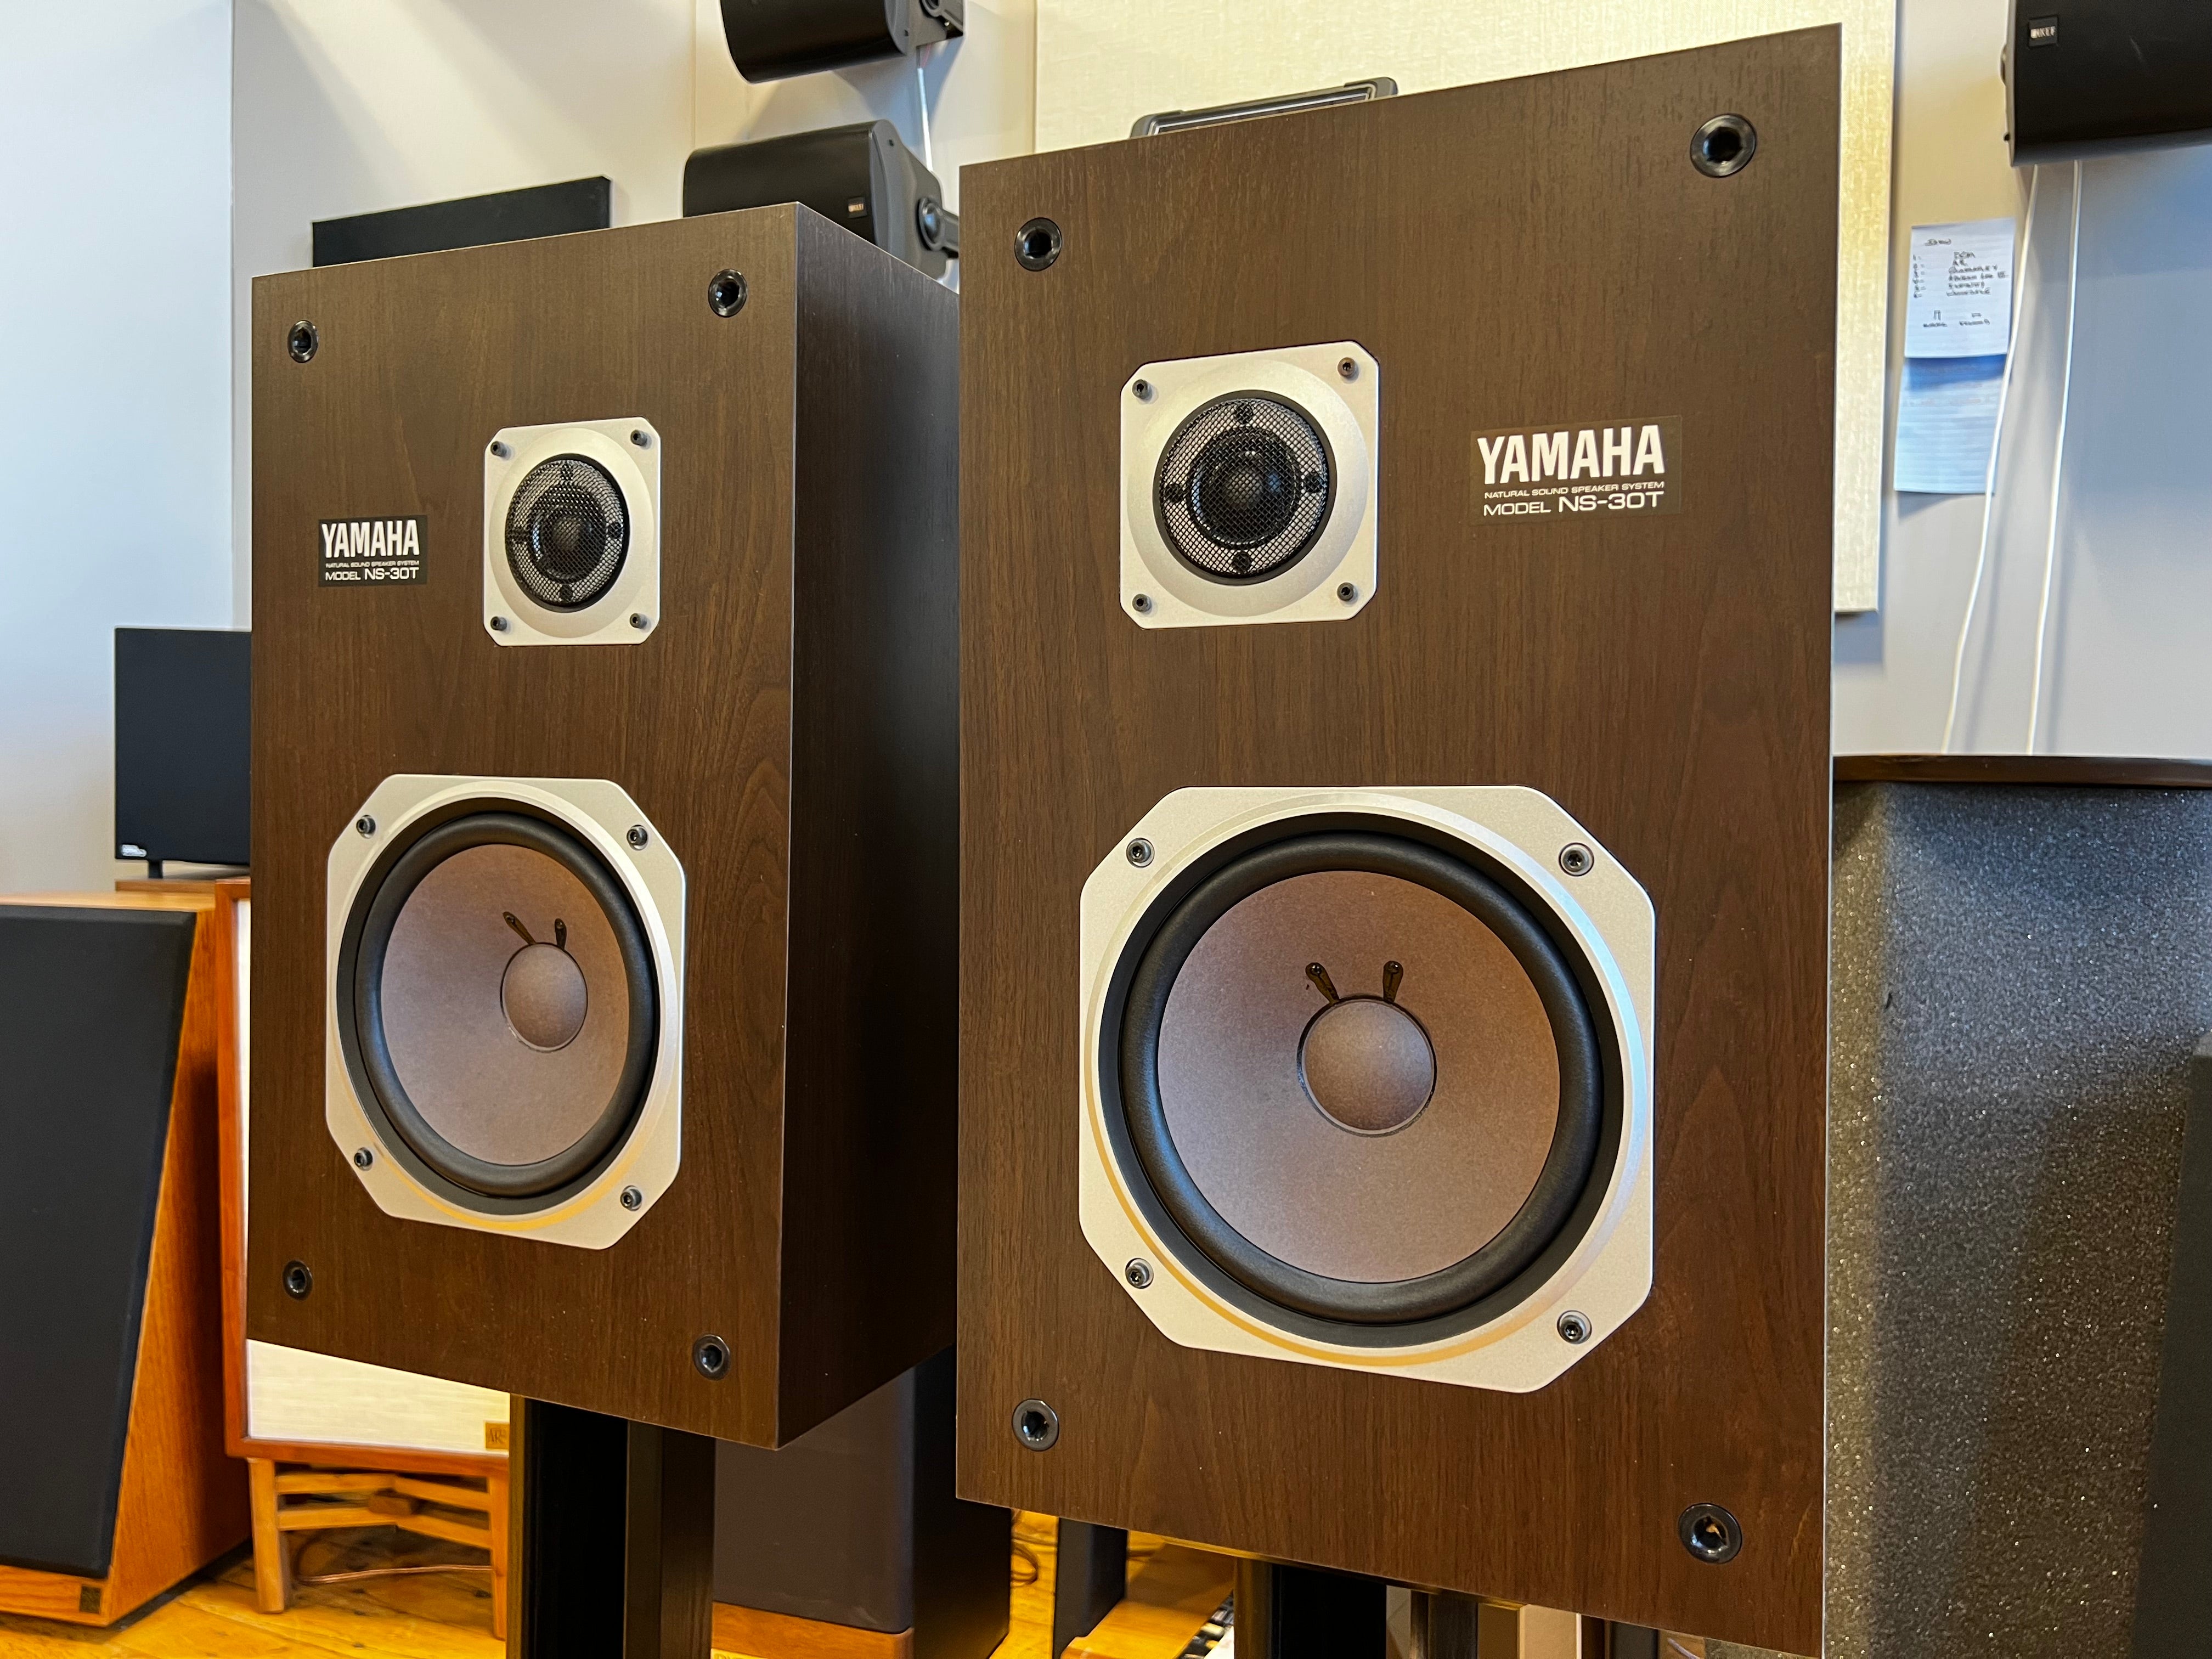 Yamaha NS-30T, "Natural Sound" Bookshelf Speaker